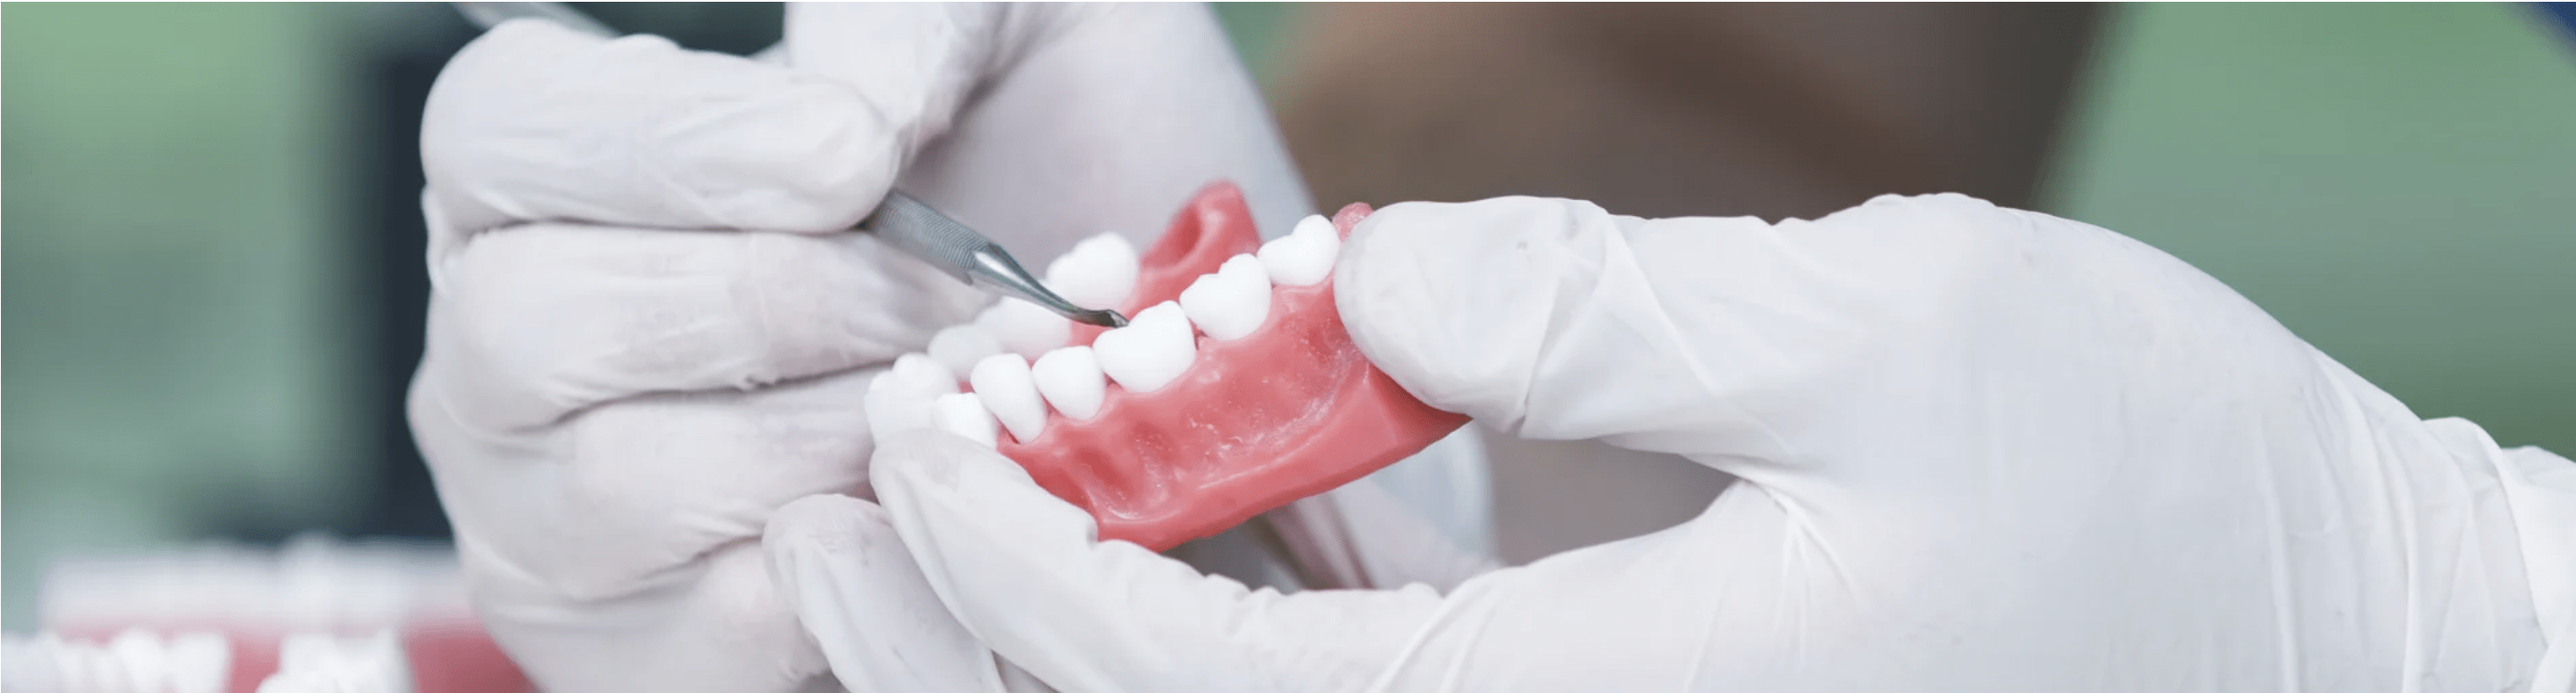 dental implants mingara dental